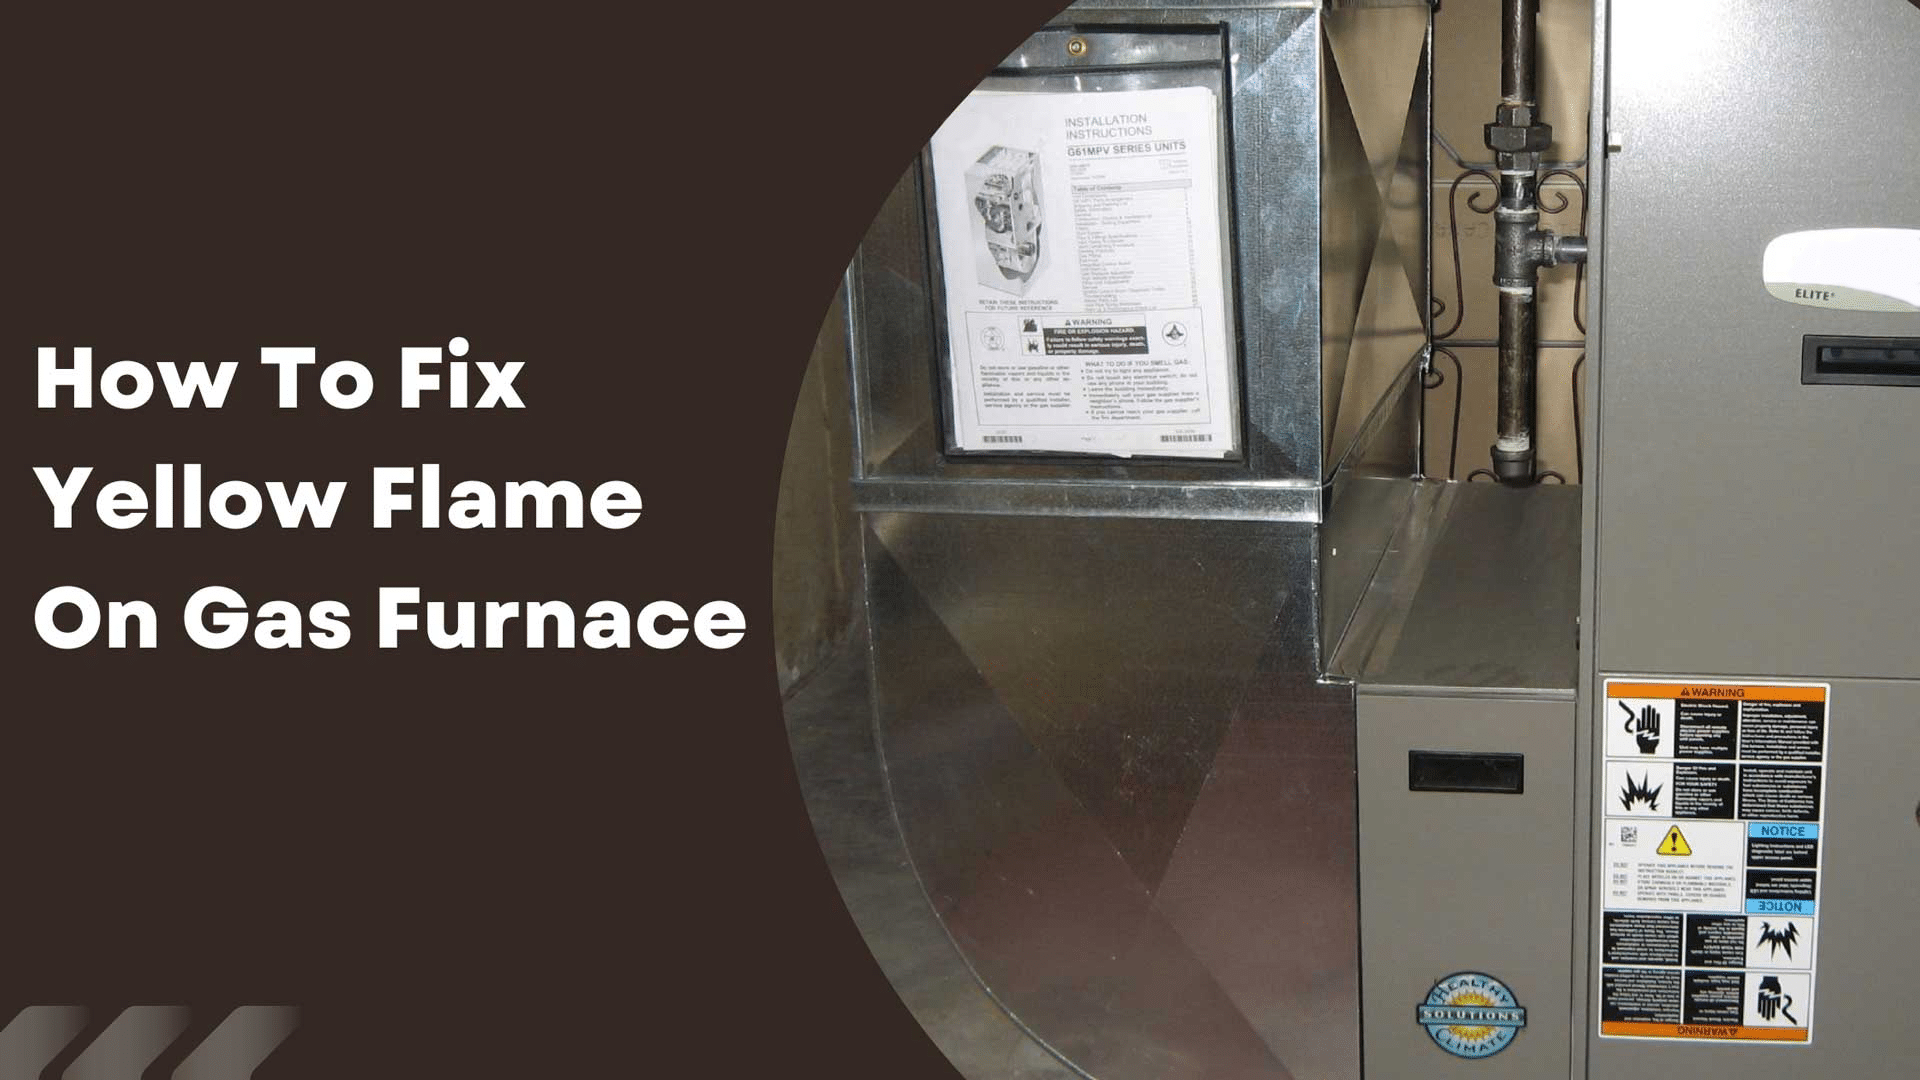 Why Are My Range Burner Flames Turning Orange? - Appliance Repair